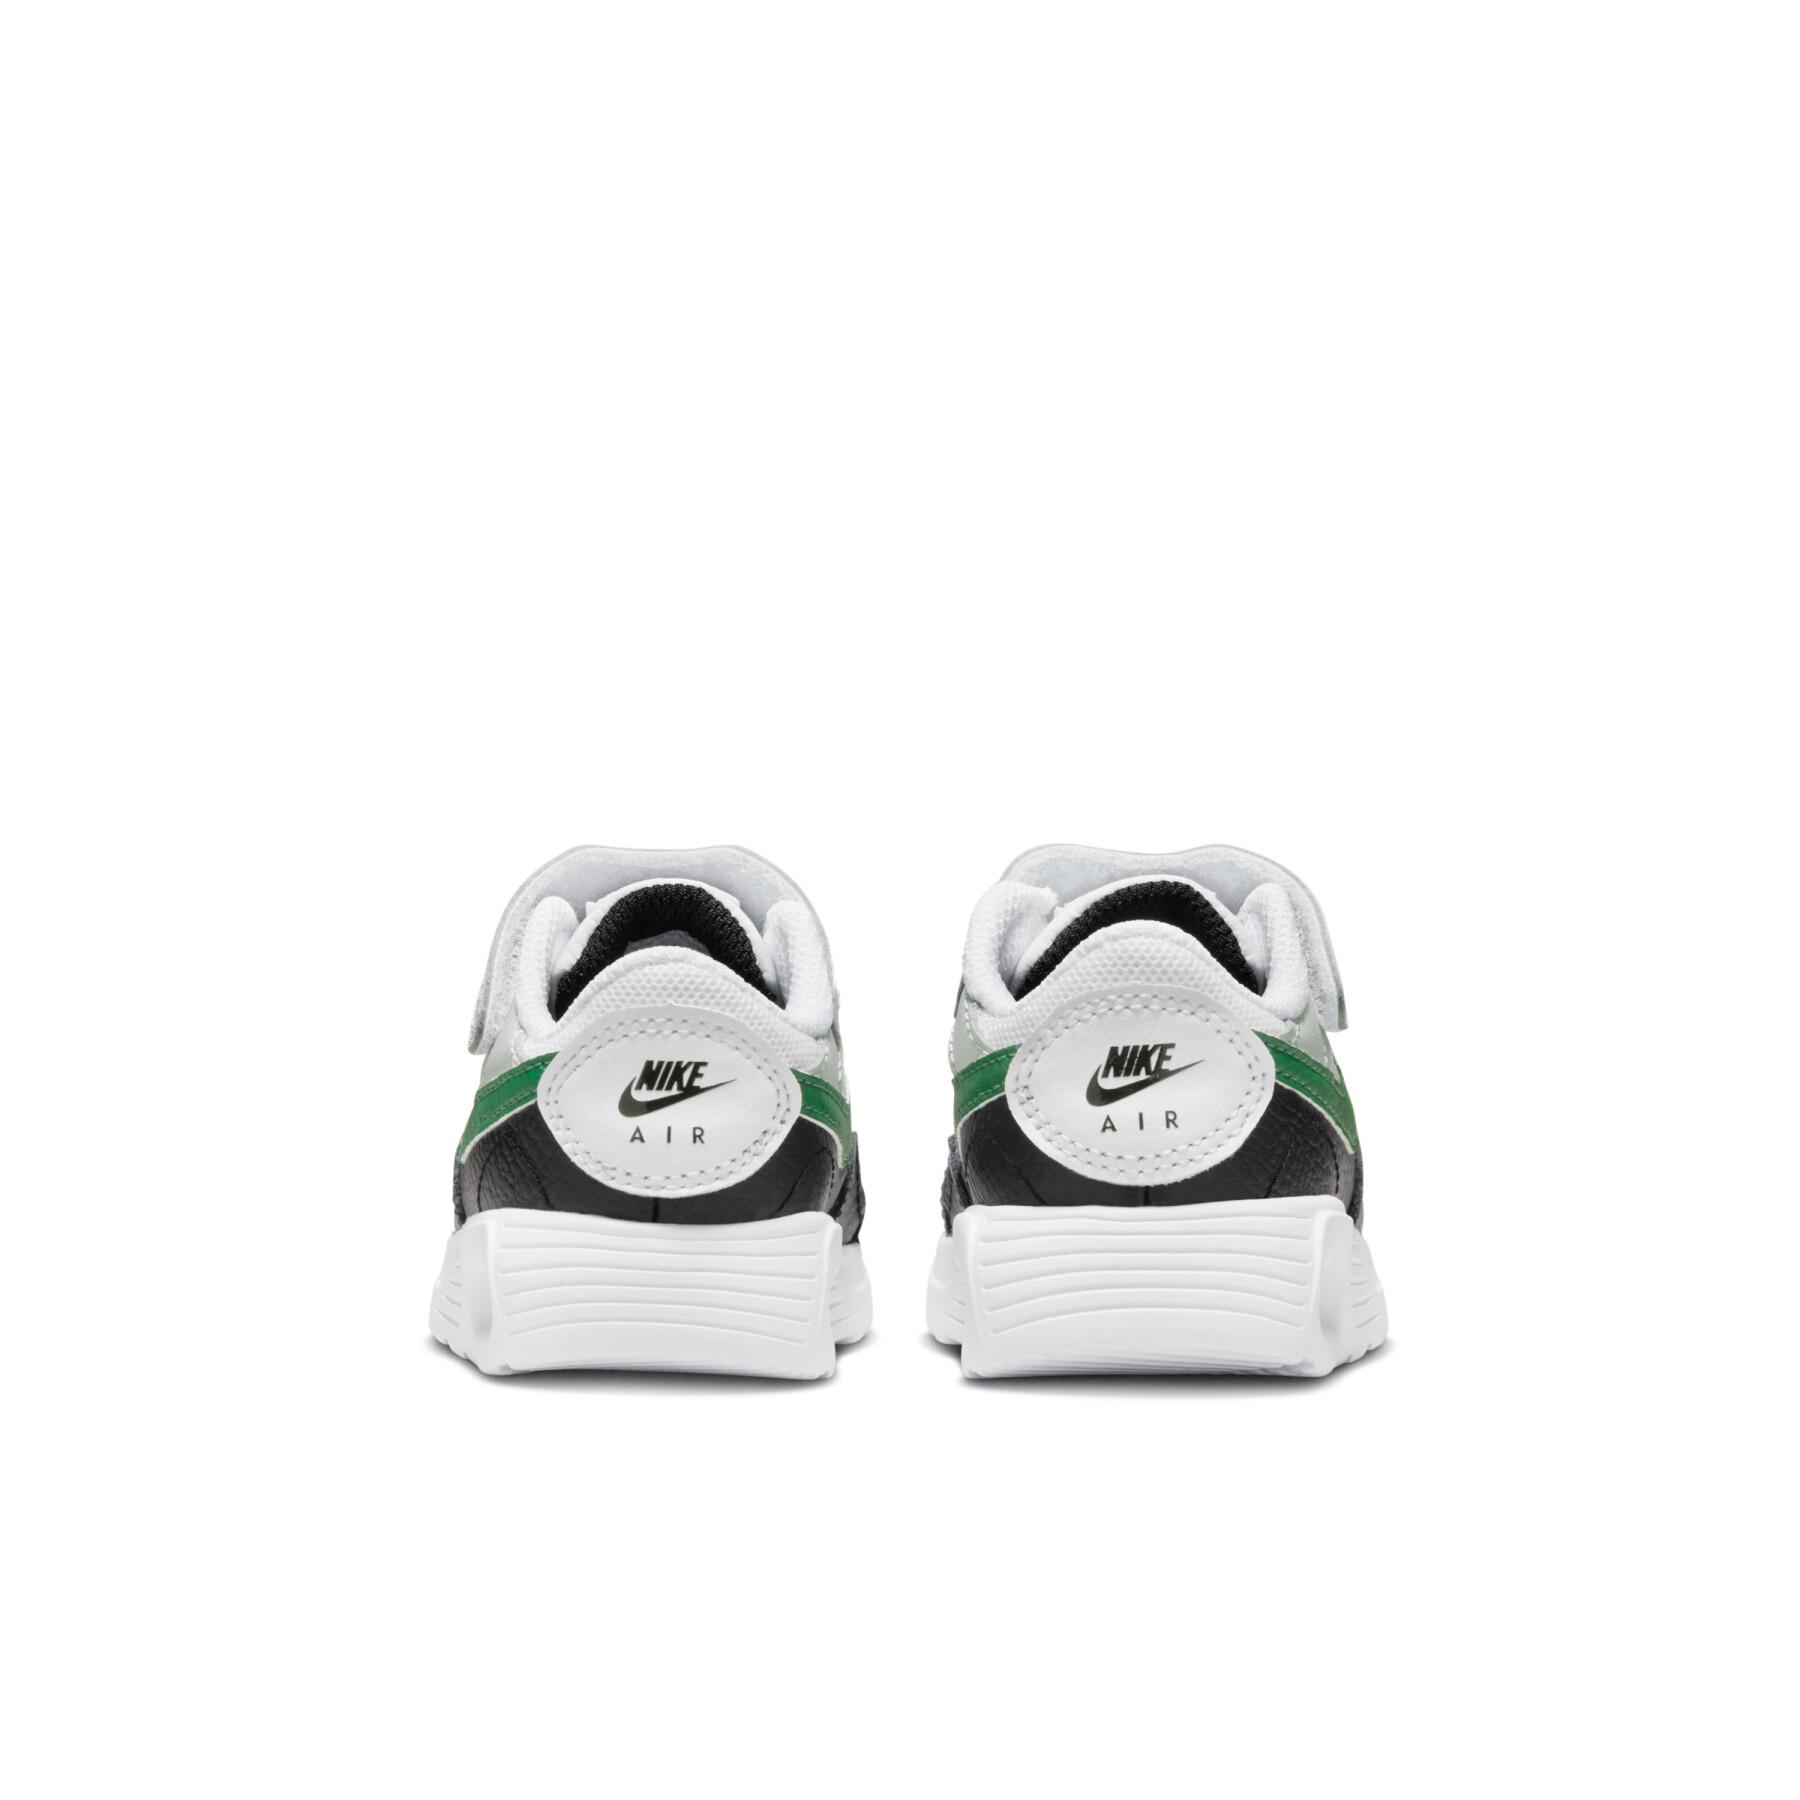 Zapatillas para bebés Nike Air Max Sc